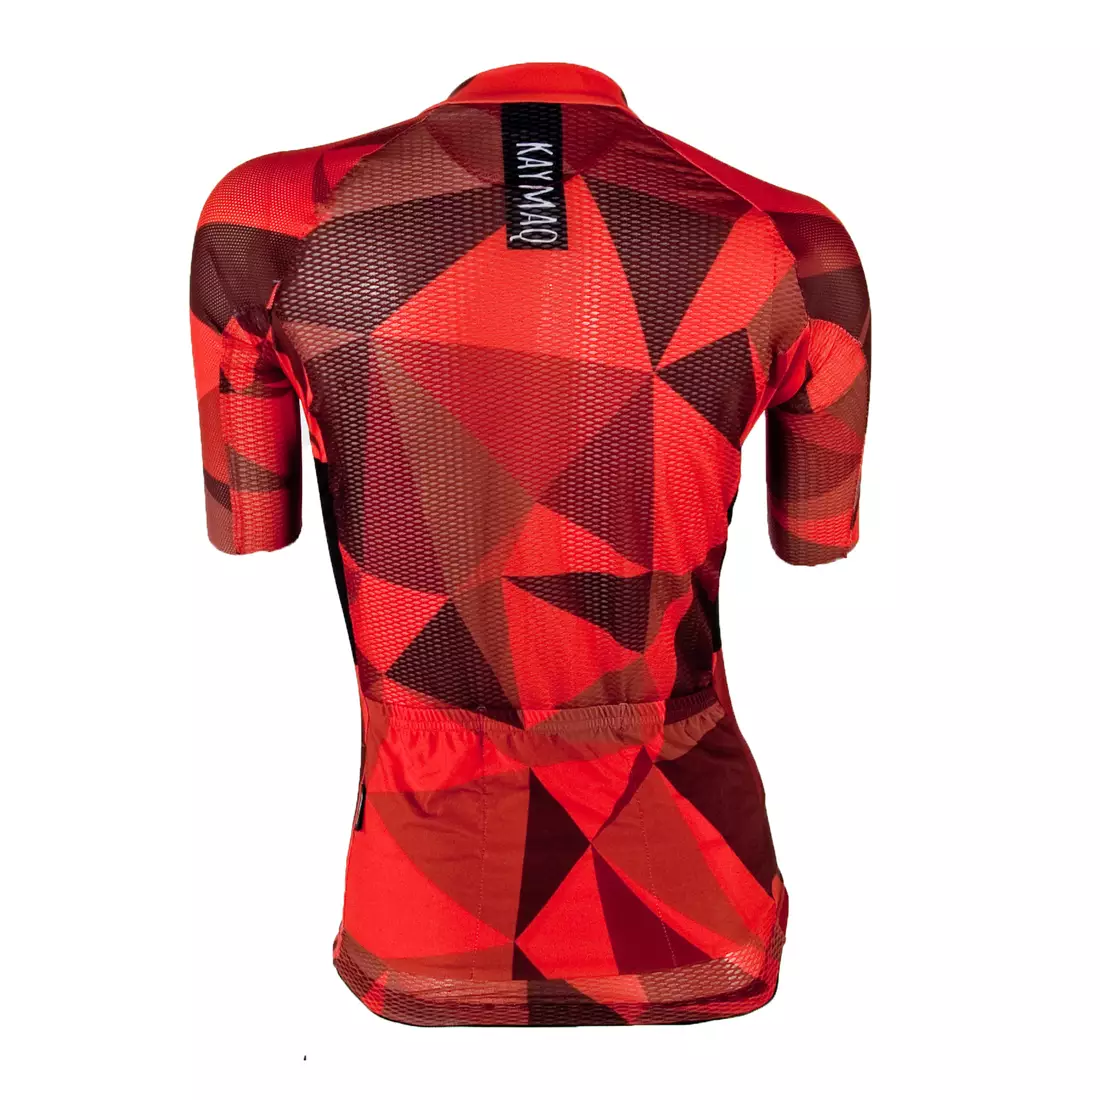 KAYMAQ RPS women's cycling jersey, red